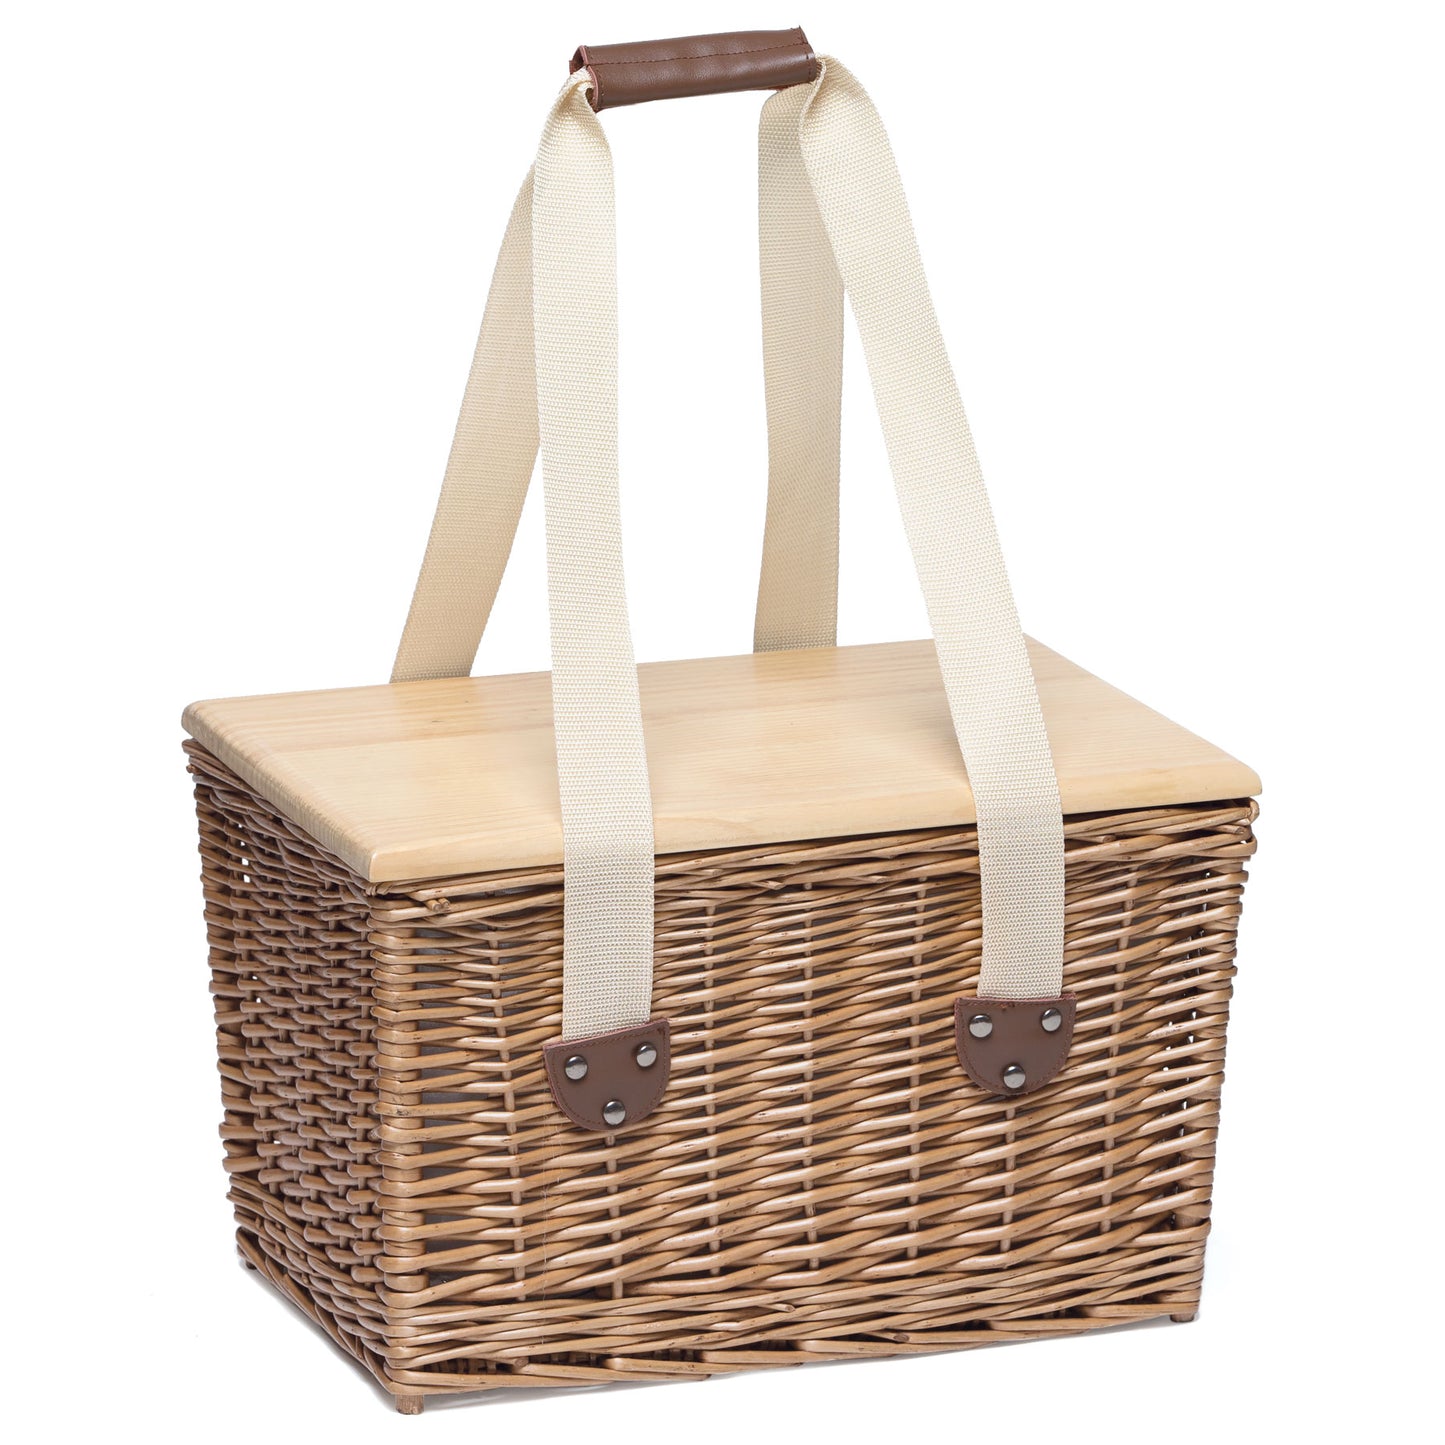 Engraved picnic basket